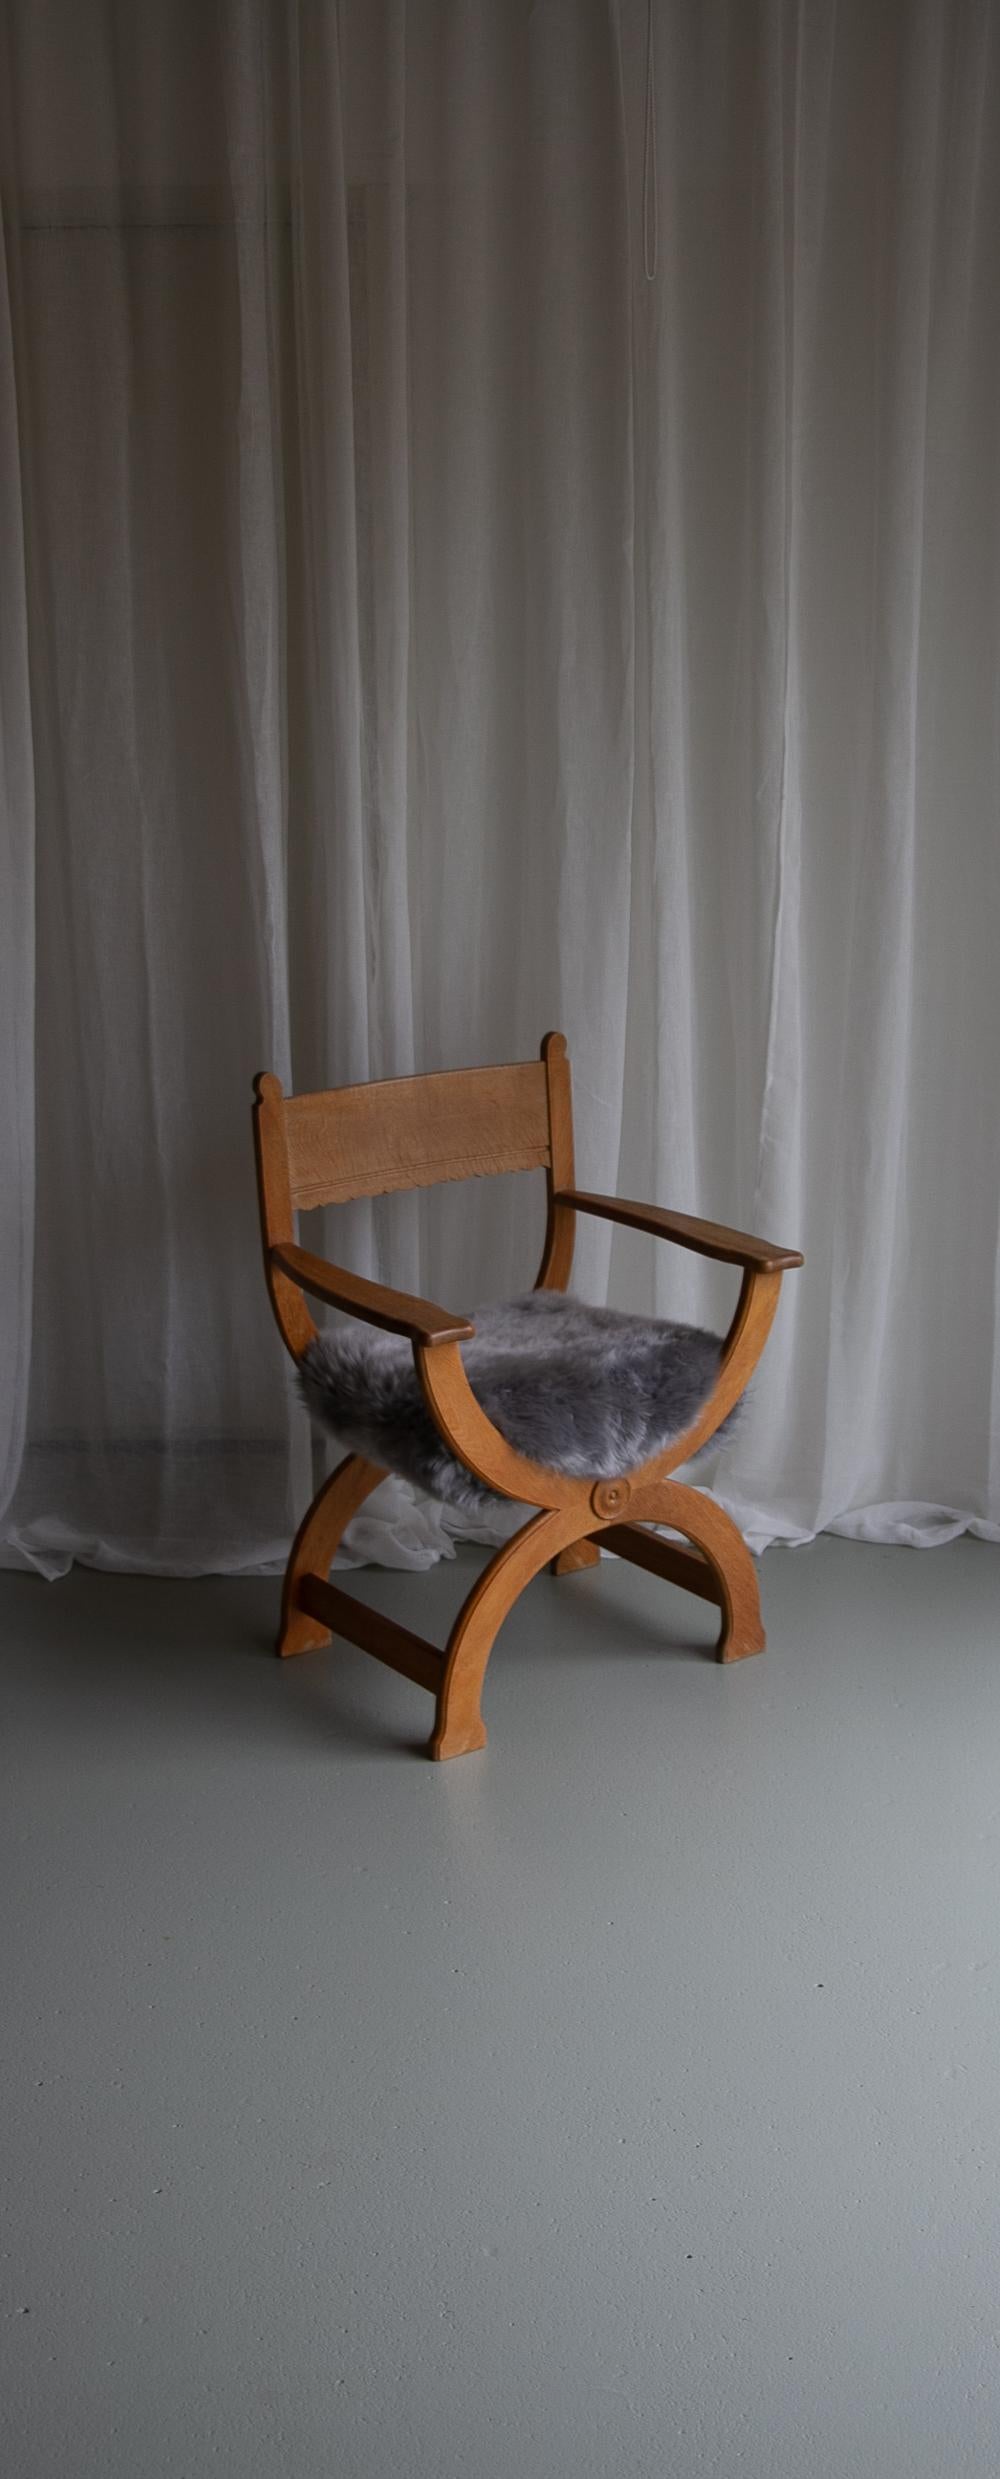 Vintage Danish Kurul Armchair in Oak by Henning Kjaernulf for EG Kvalitetsmøbel, Denmark, 1960s.

Cette chaise Curule scandinave moderne du milieu du siècle en chêne nordique massif modèle 